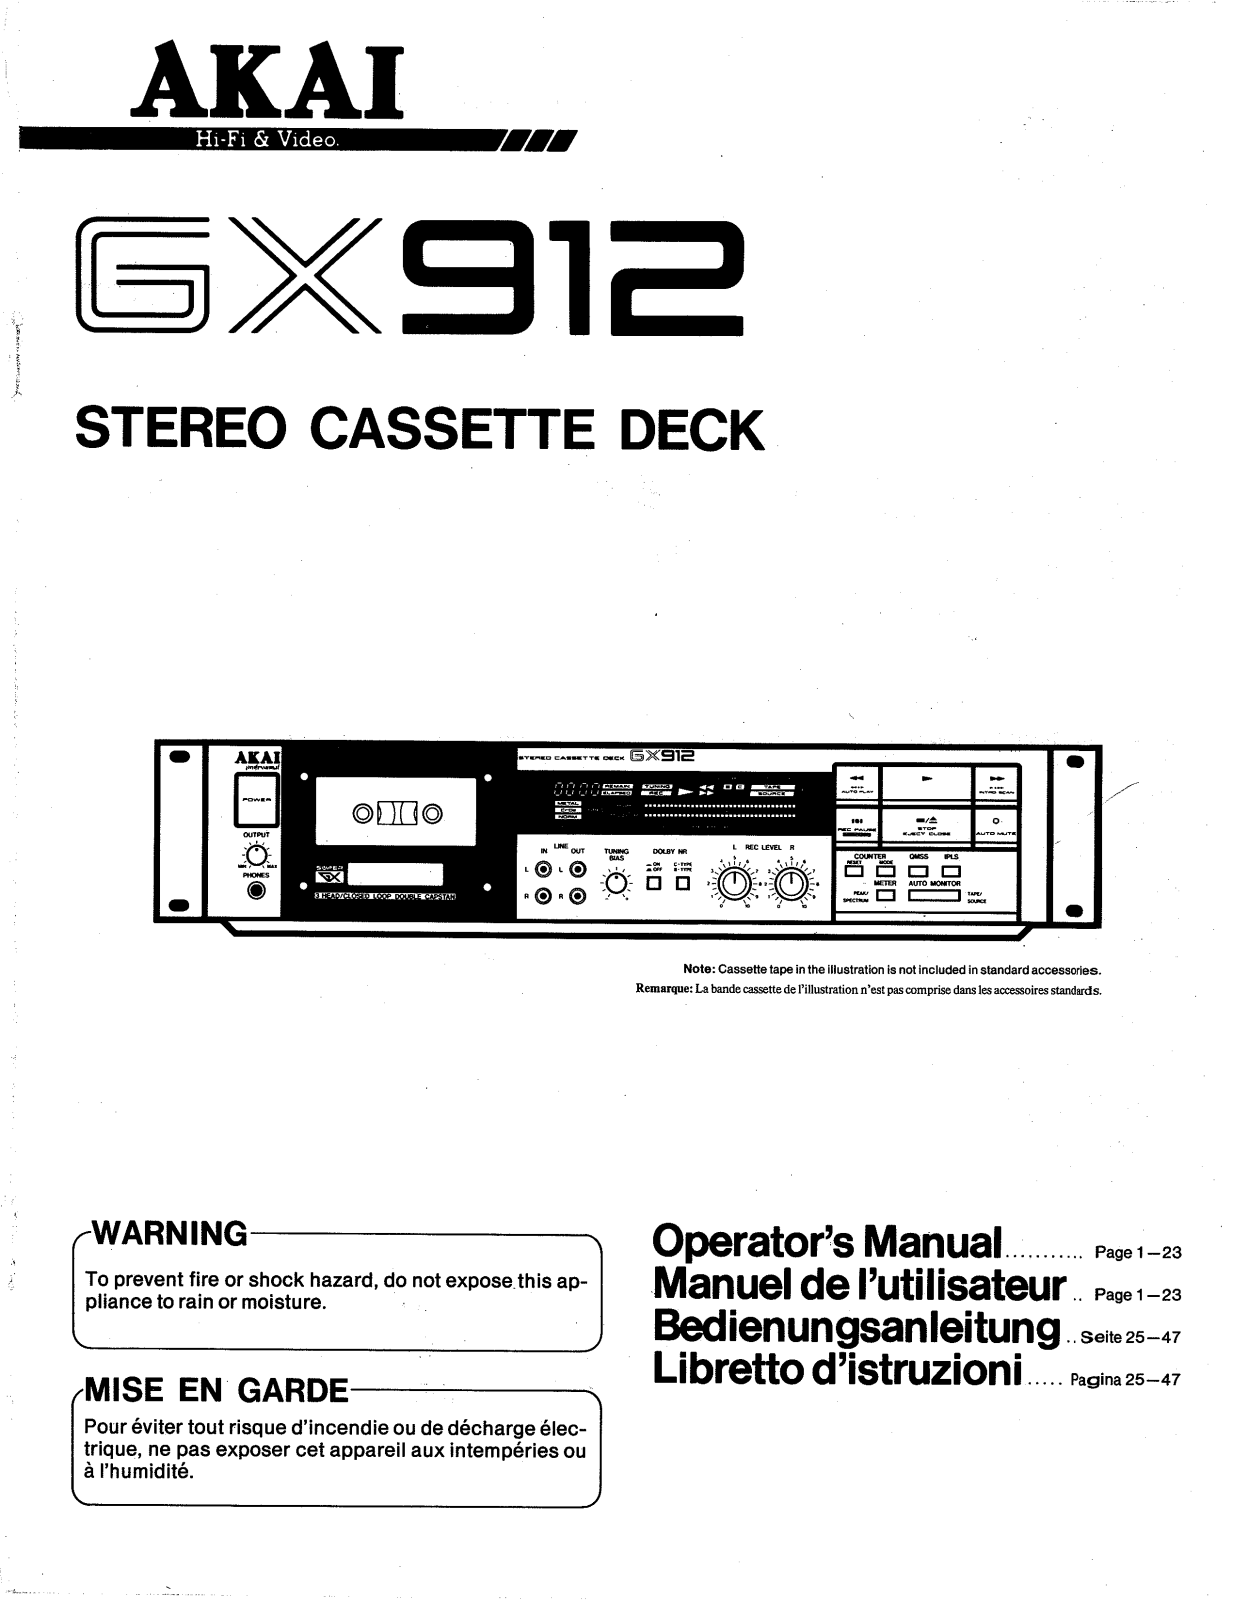 Akai GX-912 Owners manual